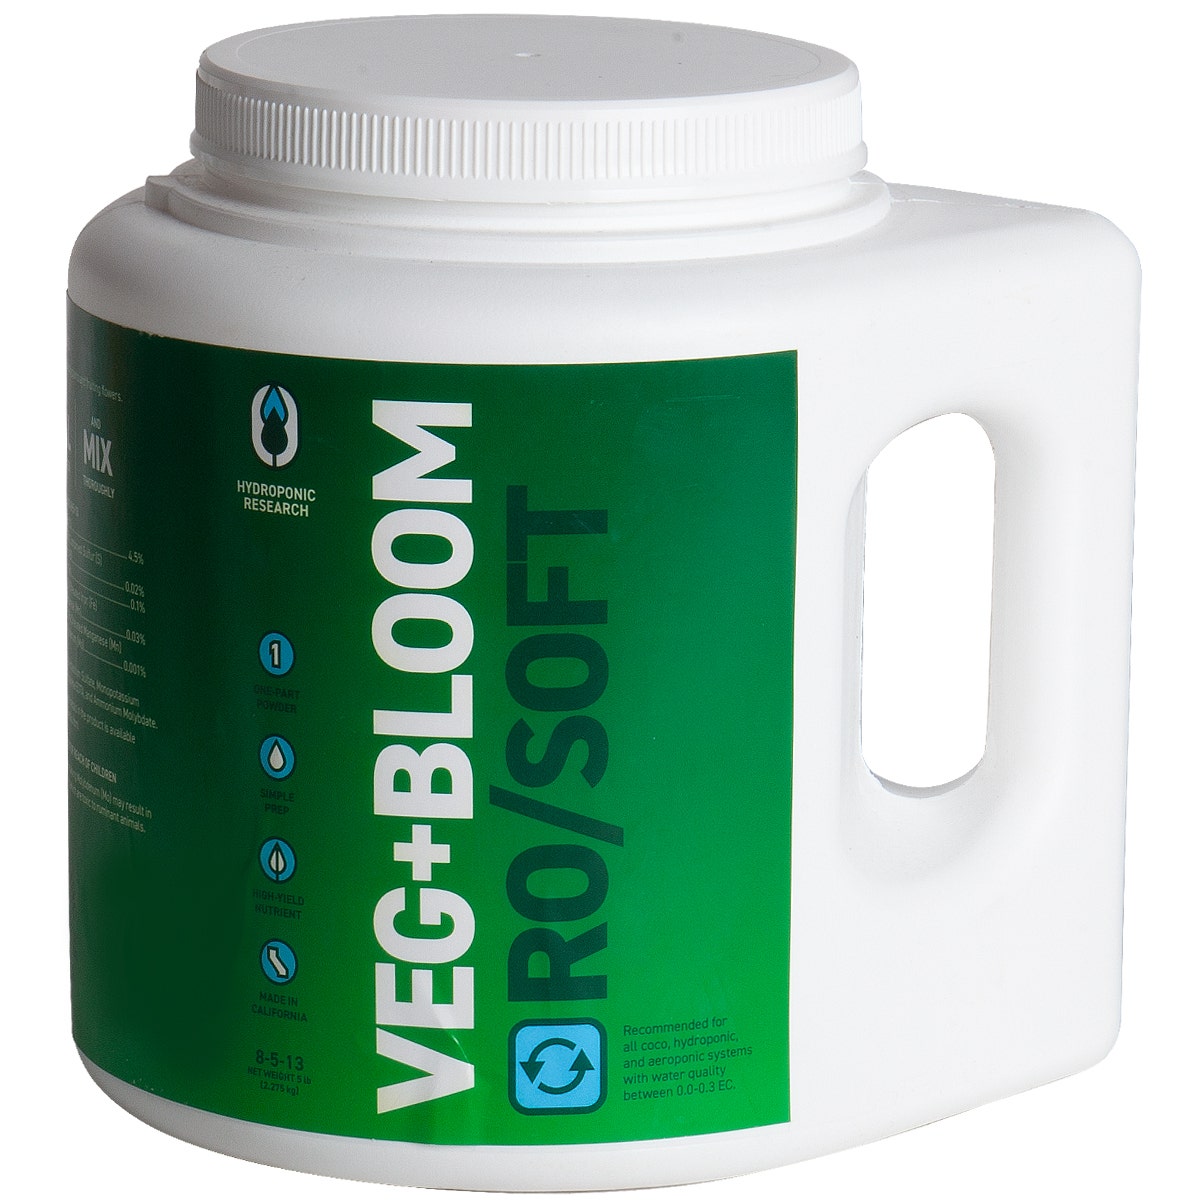 Veg+Bloom RO/Soft